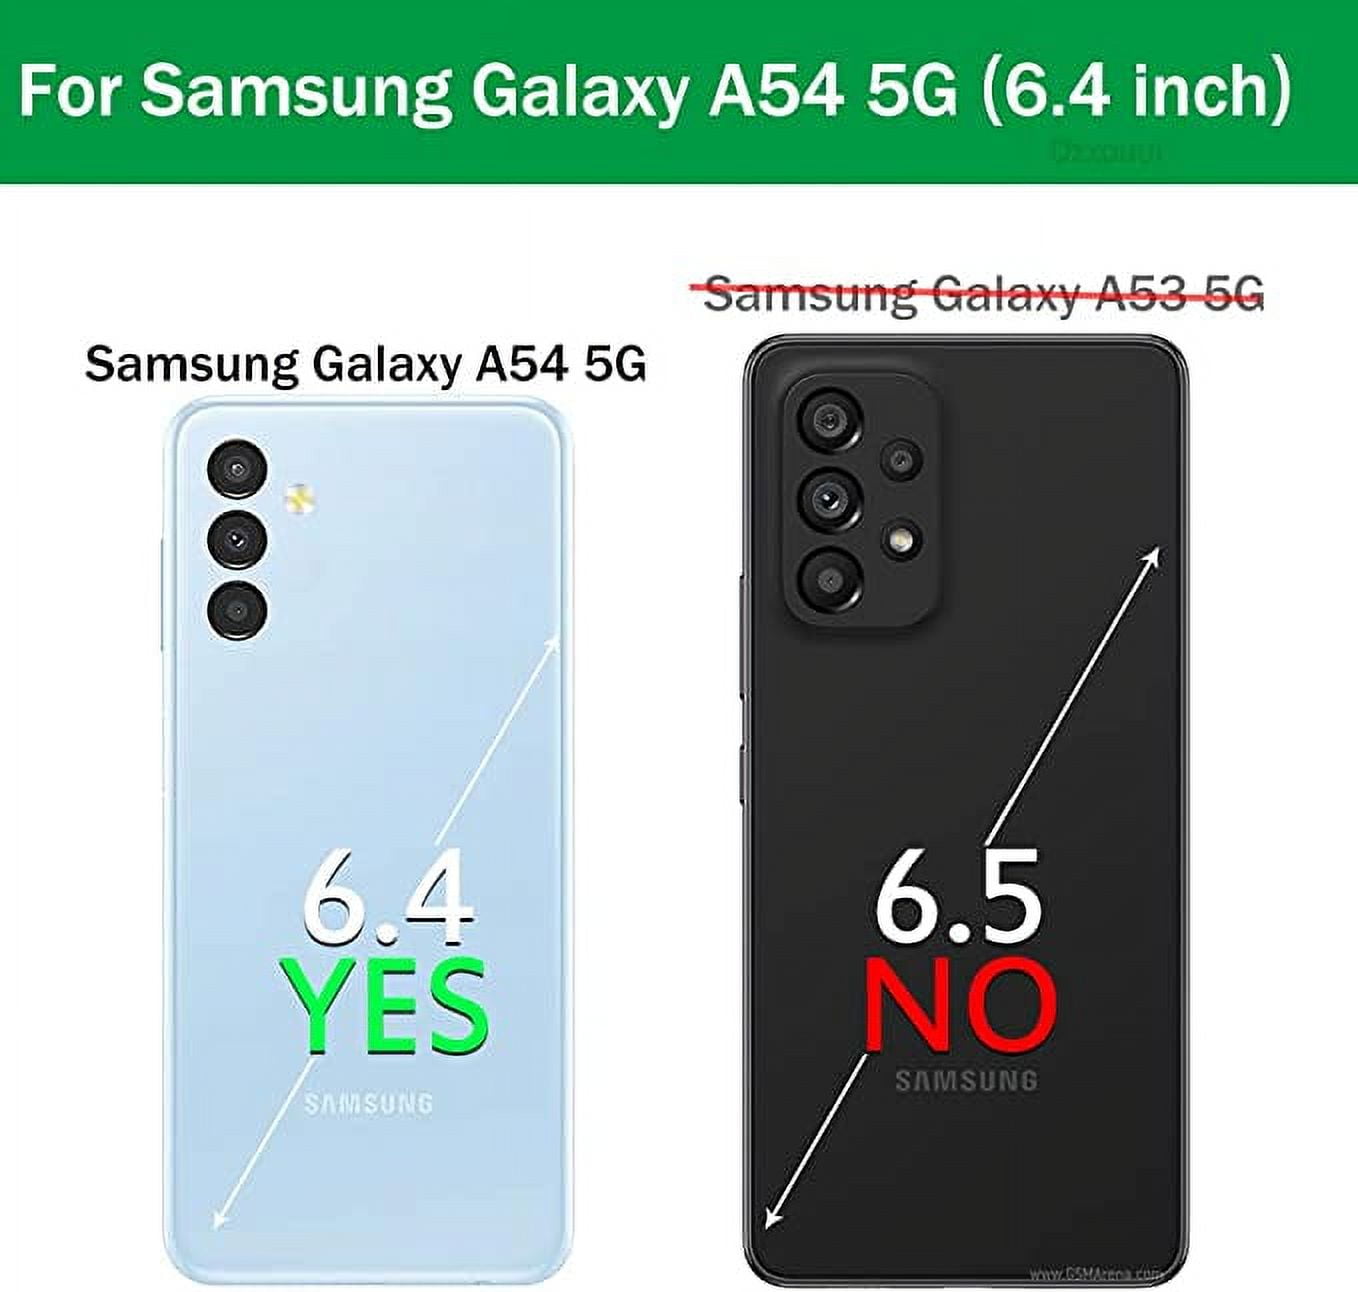 Samsung Galaxy A54: Bridging Gap Between Affordability And Premium